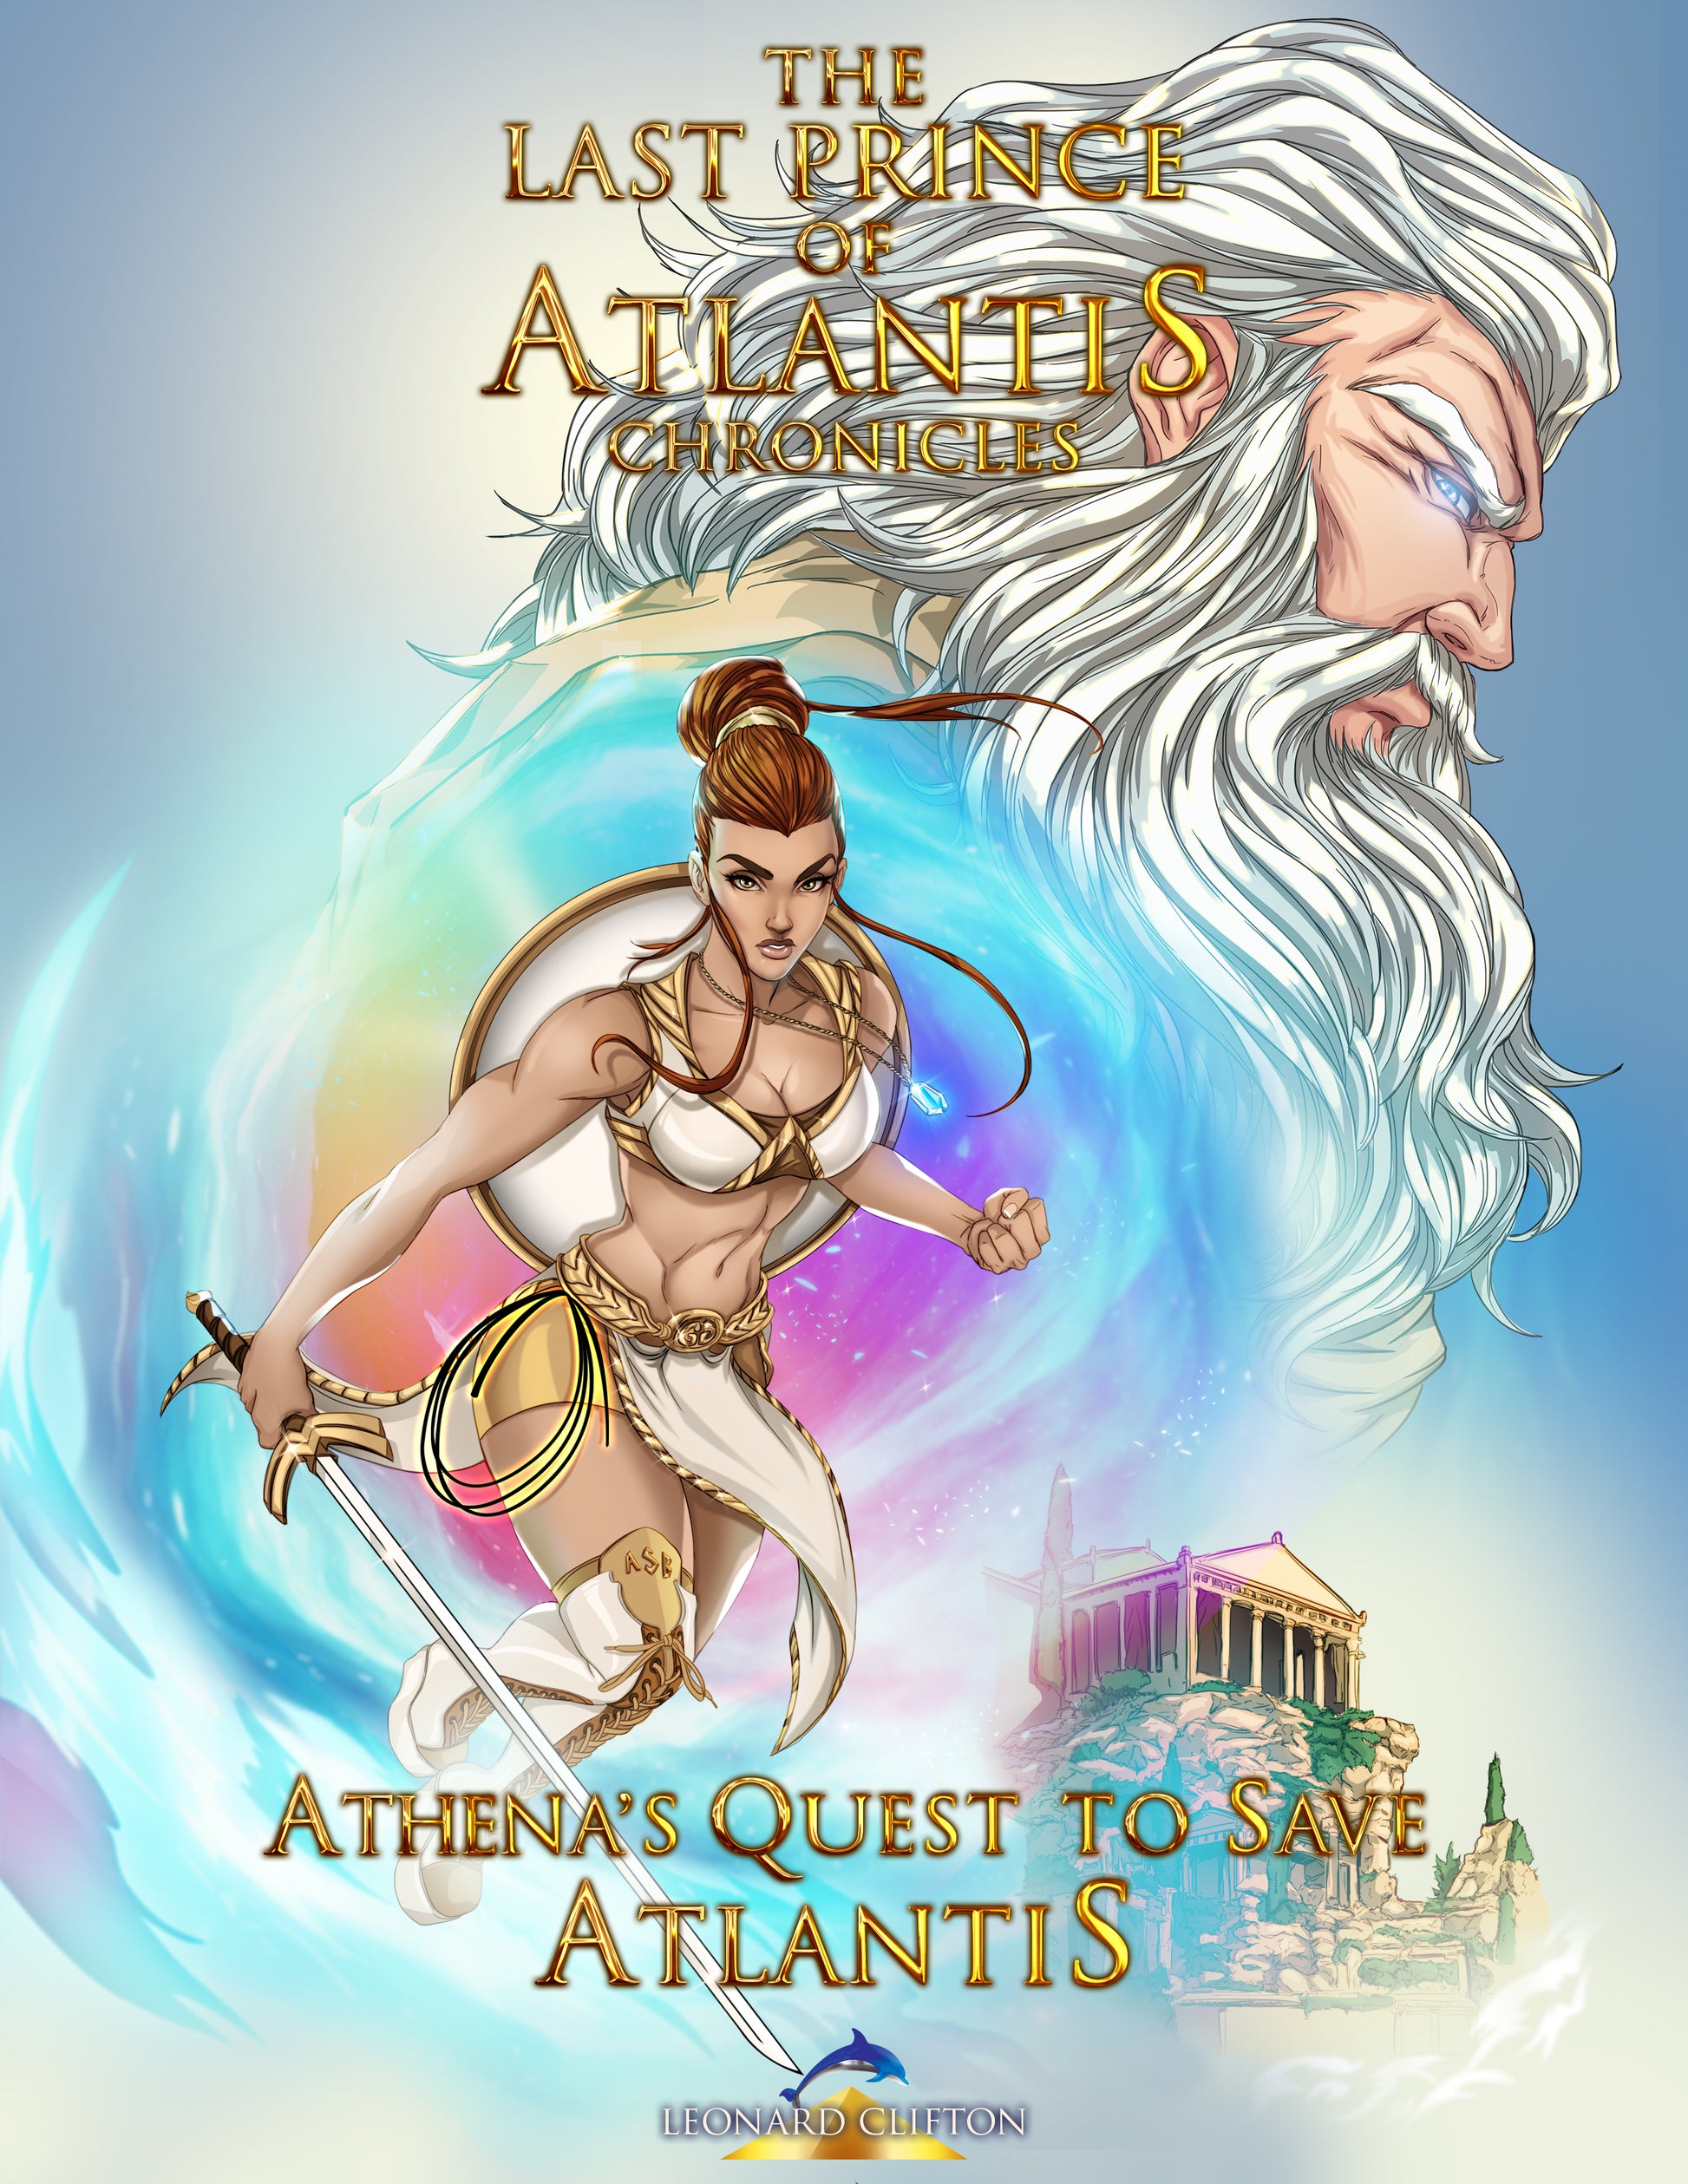 The Last Prince of Atlantis Chronicles Book III Athena's Quest to Save Atlantis - SHOPTLPA.COM